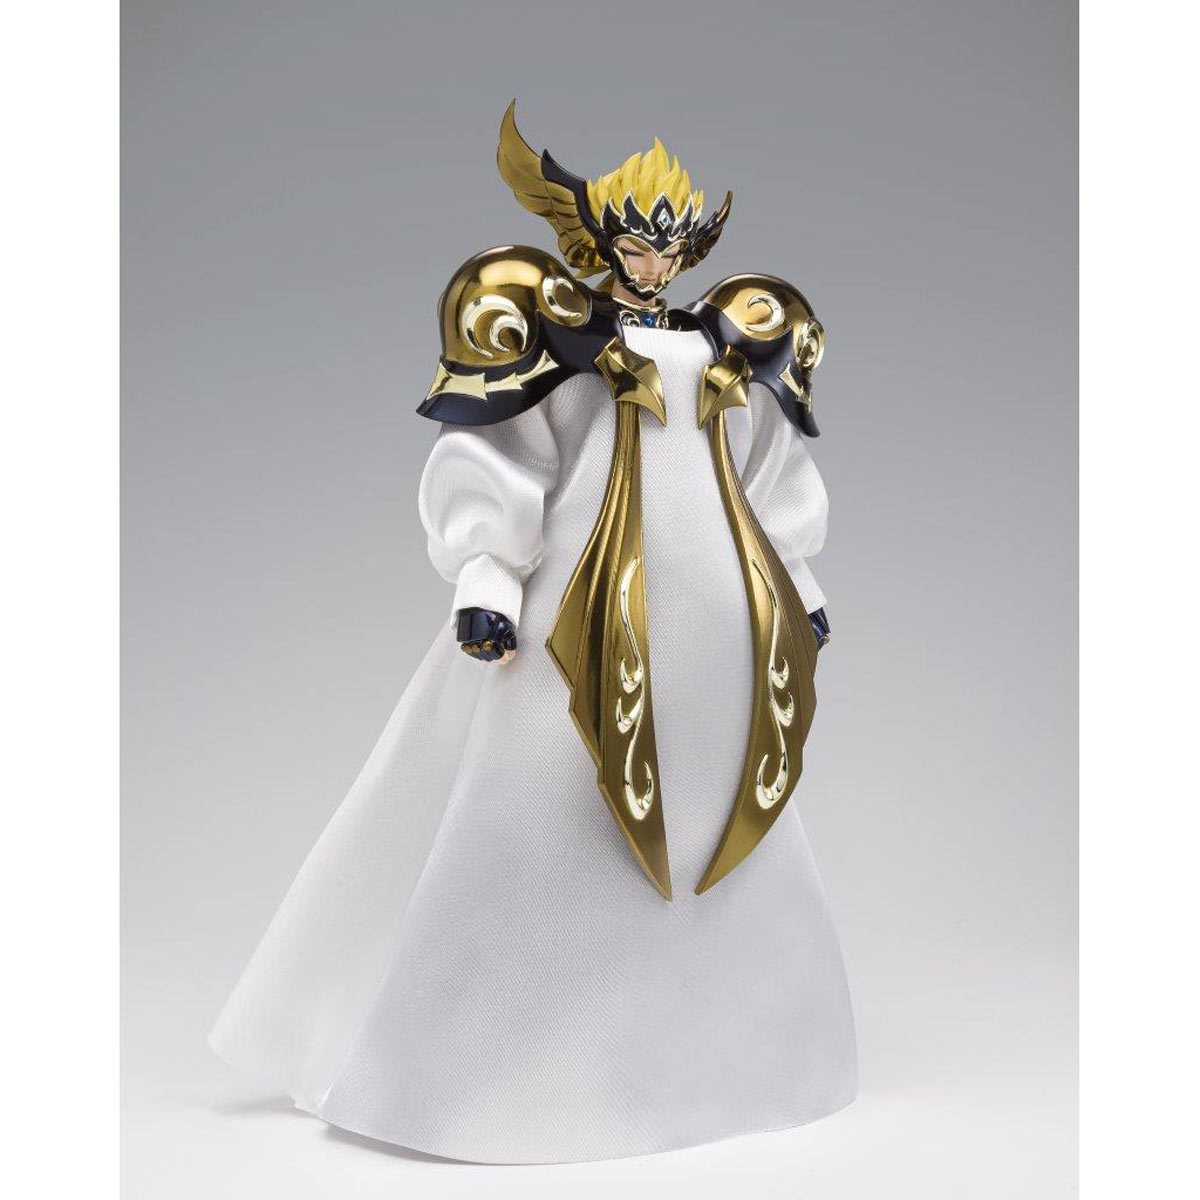 TAMASHII NATIONS Bandai Saint Cloth Myth EX Aries Mu (God Cloth) Saint  Seiya -Soul of Gold- Action Figure